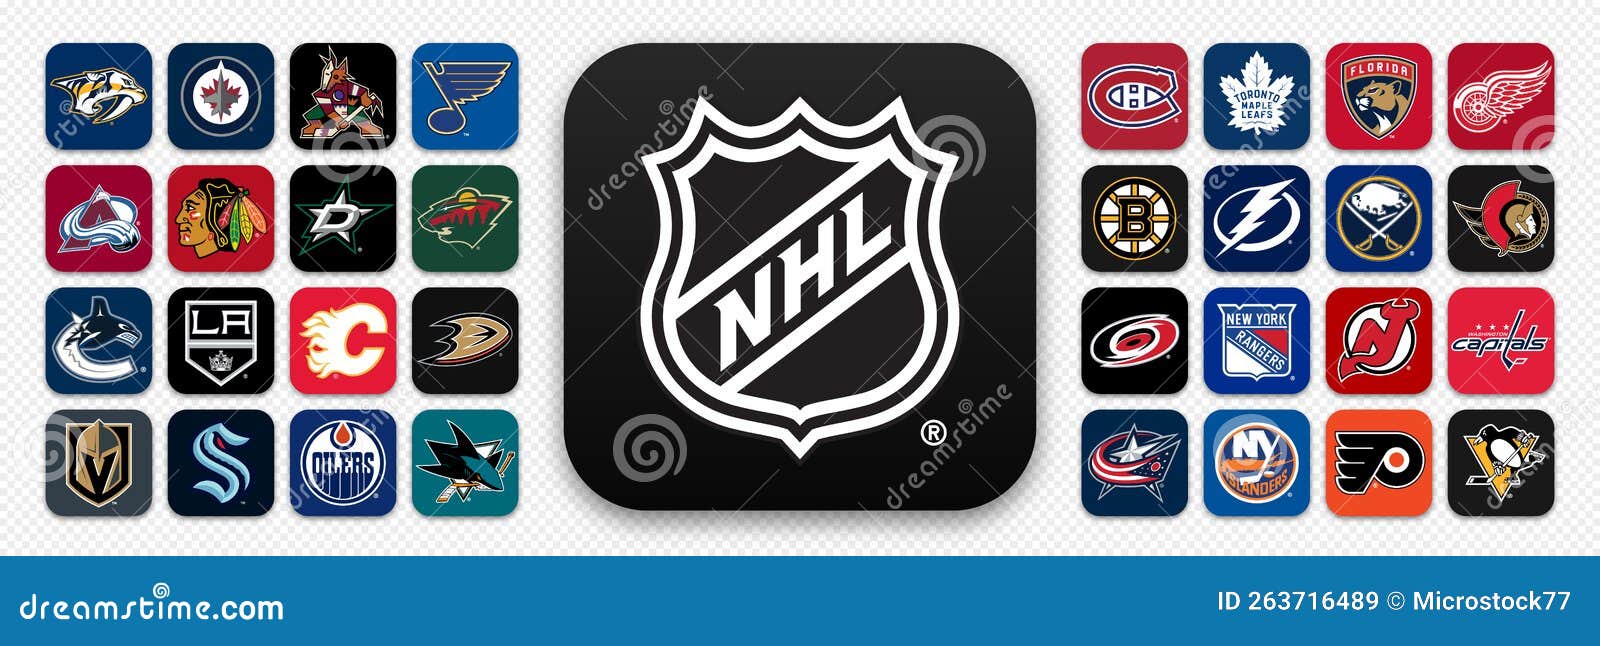 NHL Logos: All The National Hockey League Team Logos 